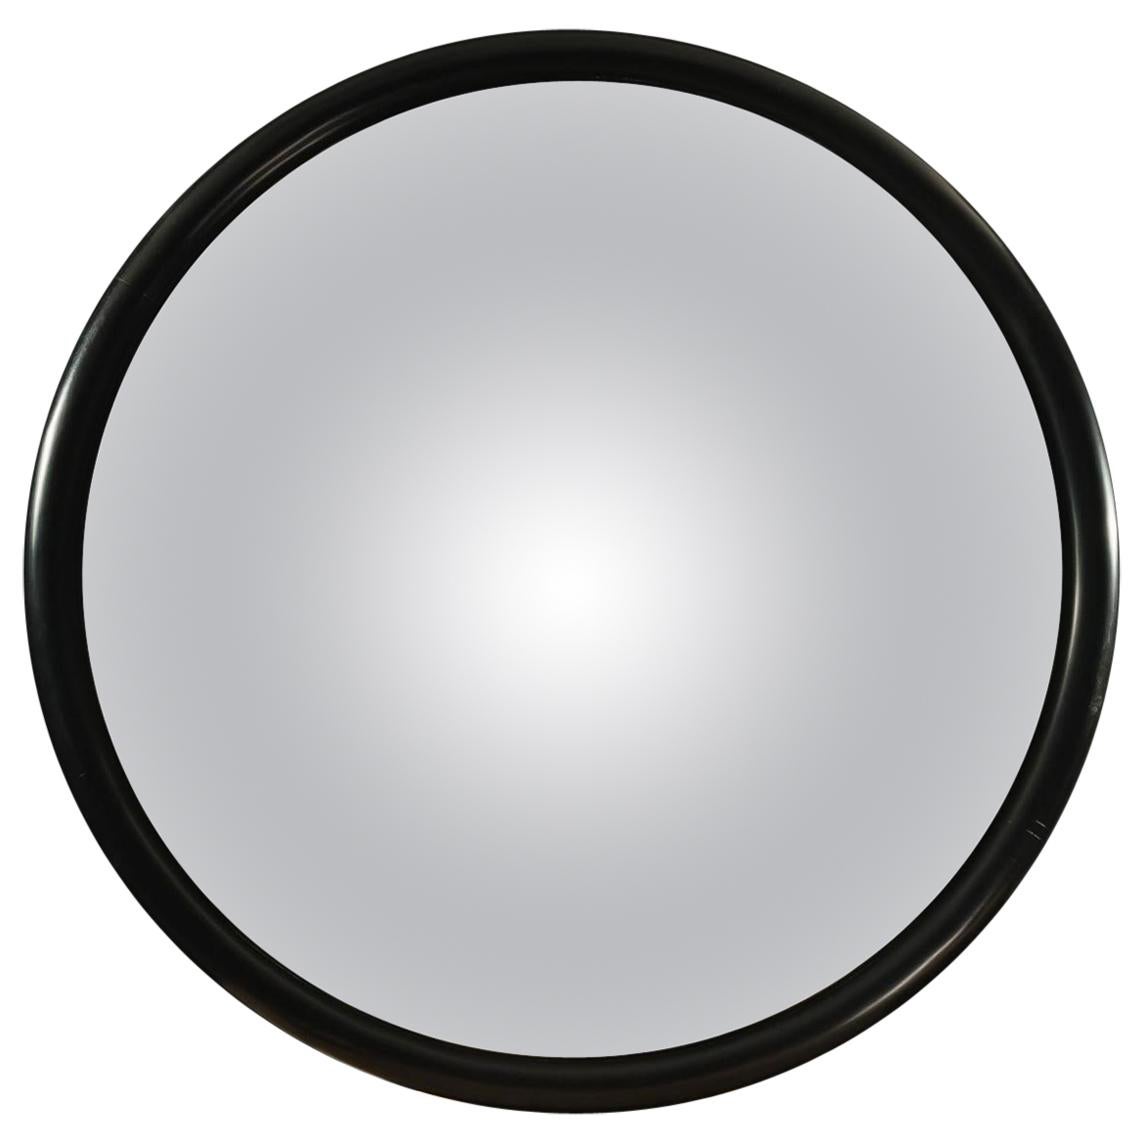 Huge Industrial Convex Mirror No. 1 in Original Condition For Sale at ...